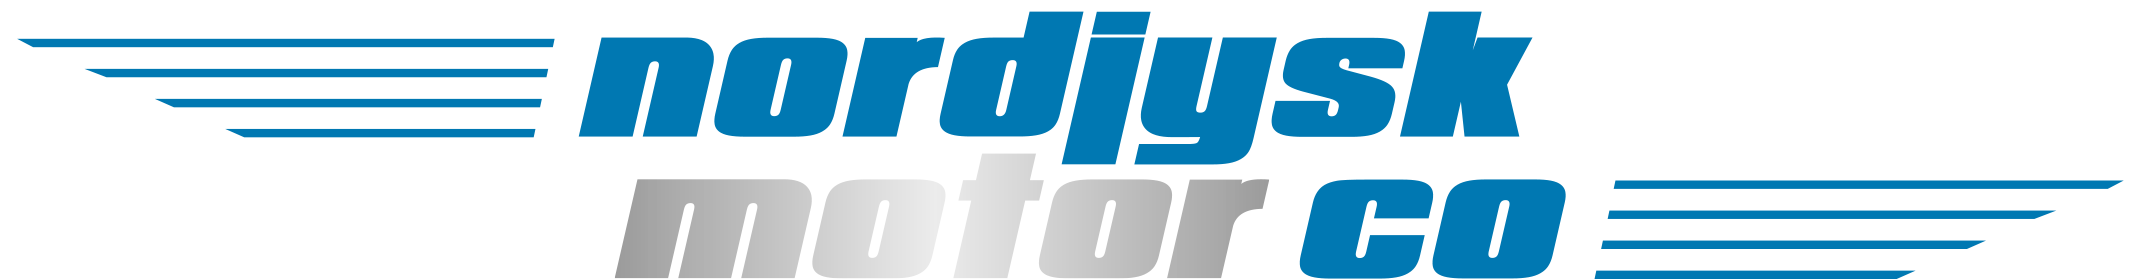 Nordjysk Motor logo